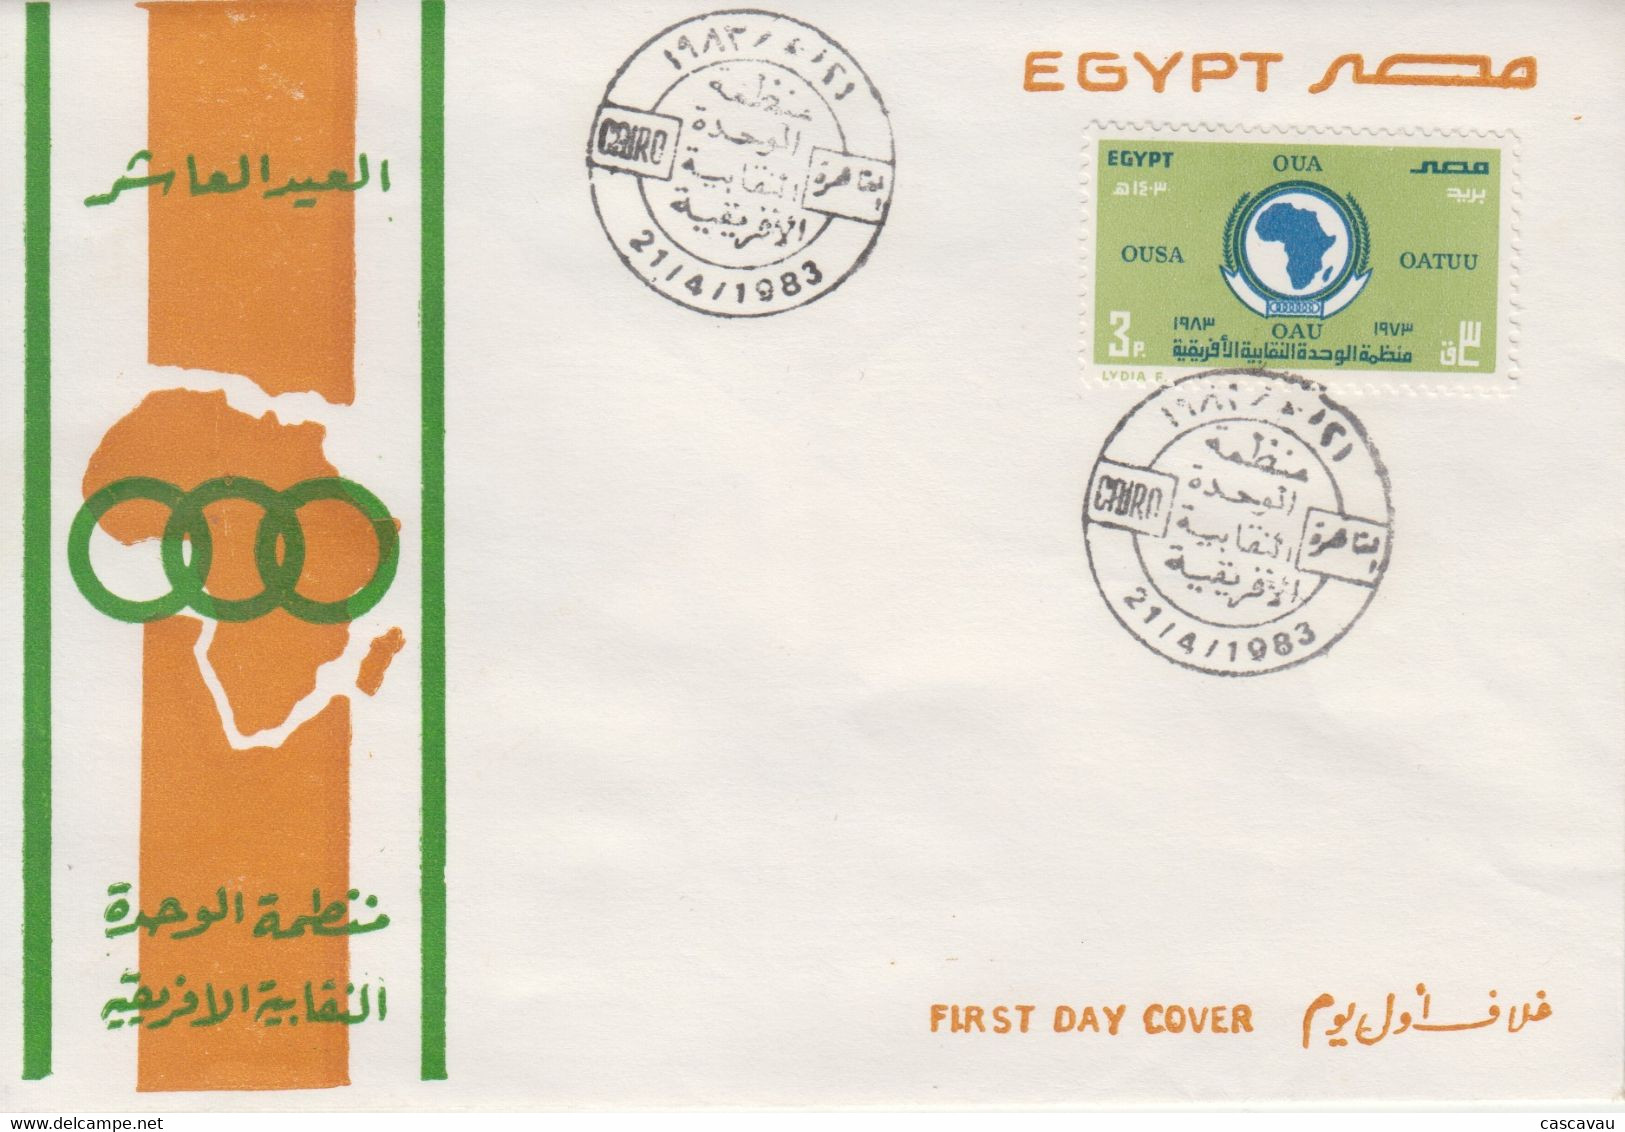 Enveloppe  FDC  1er  Jour   EGYPTE   10éme  Anniversaire   Organisation  Unité  Syndicale  Africaine   1983 - Briefe U. Dokumente